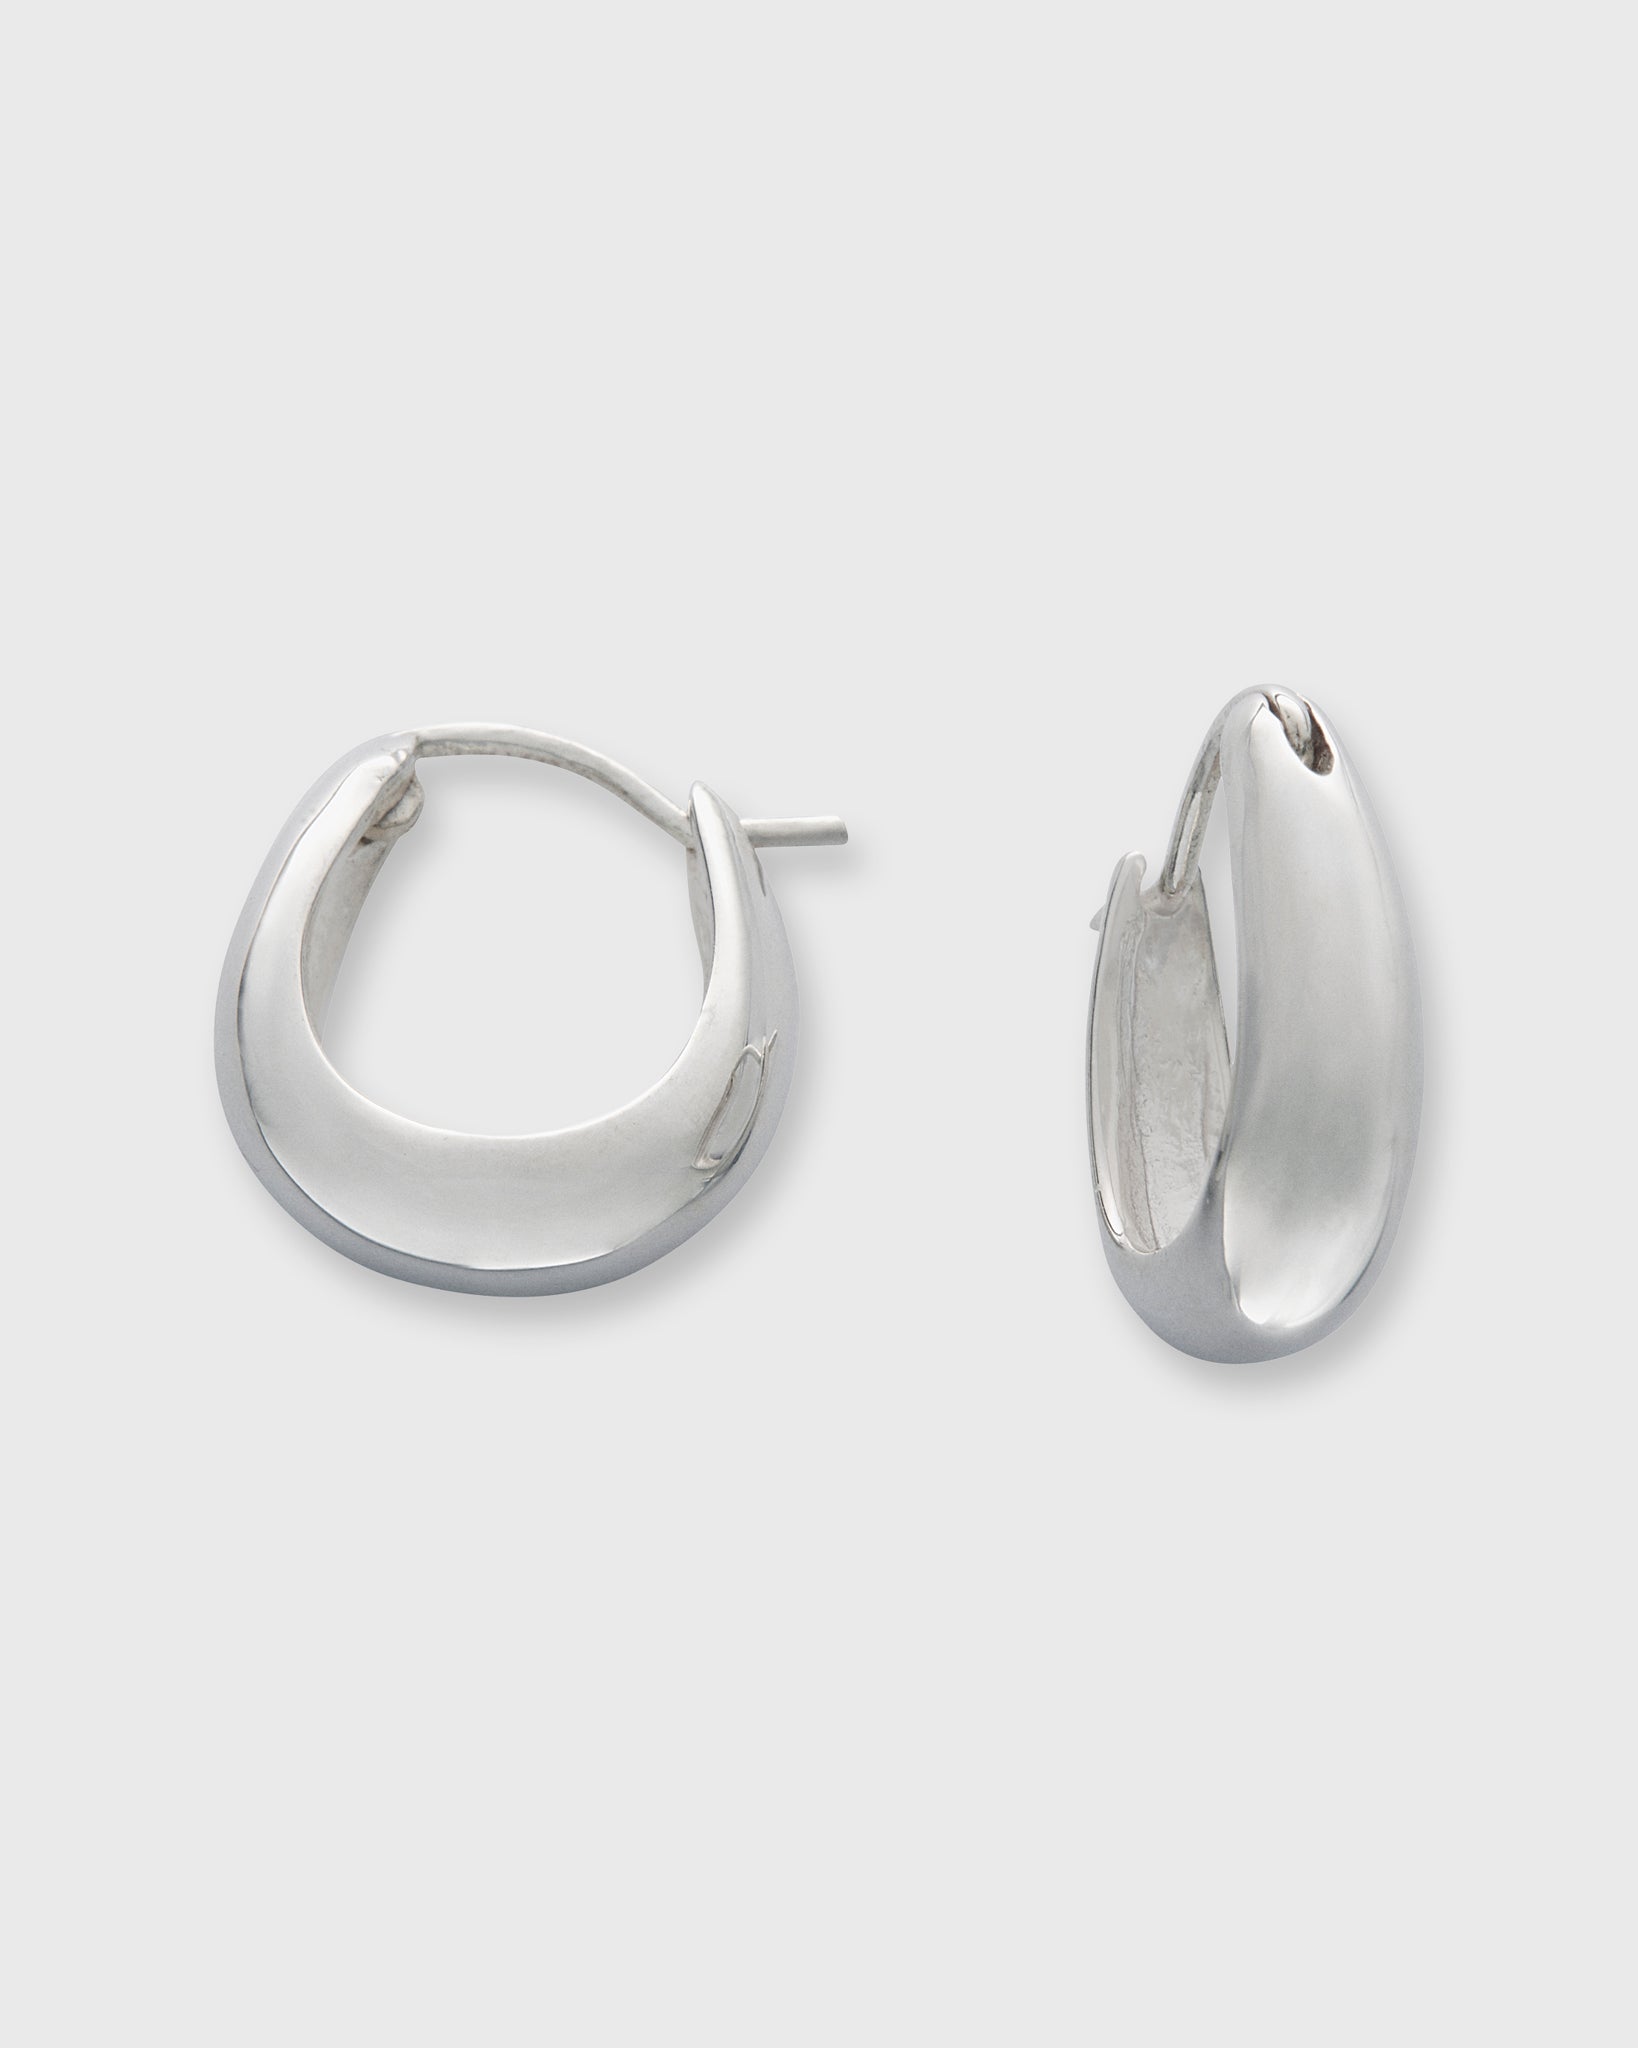 Small Hoop Earrings in Sterling Silver